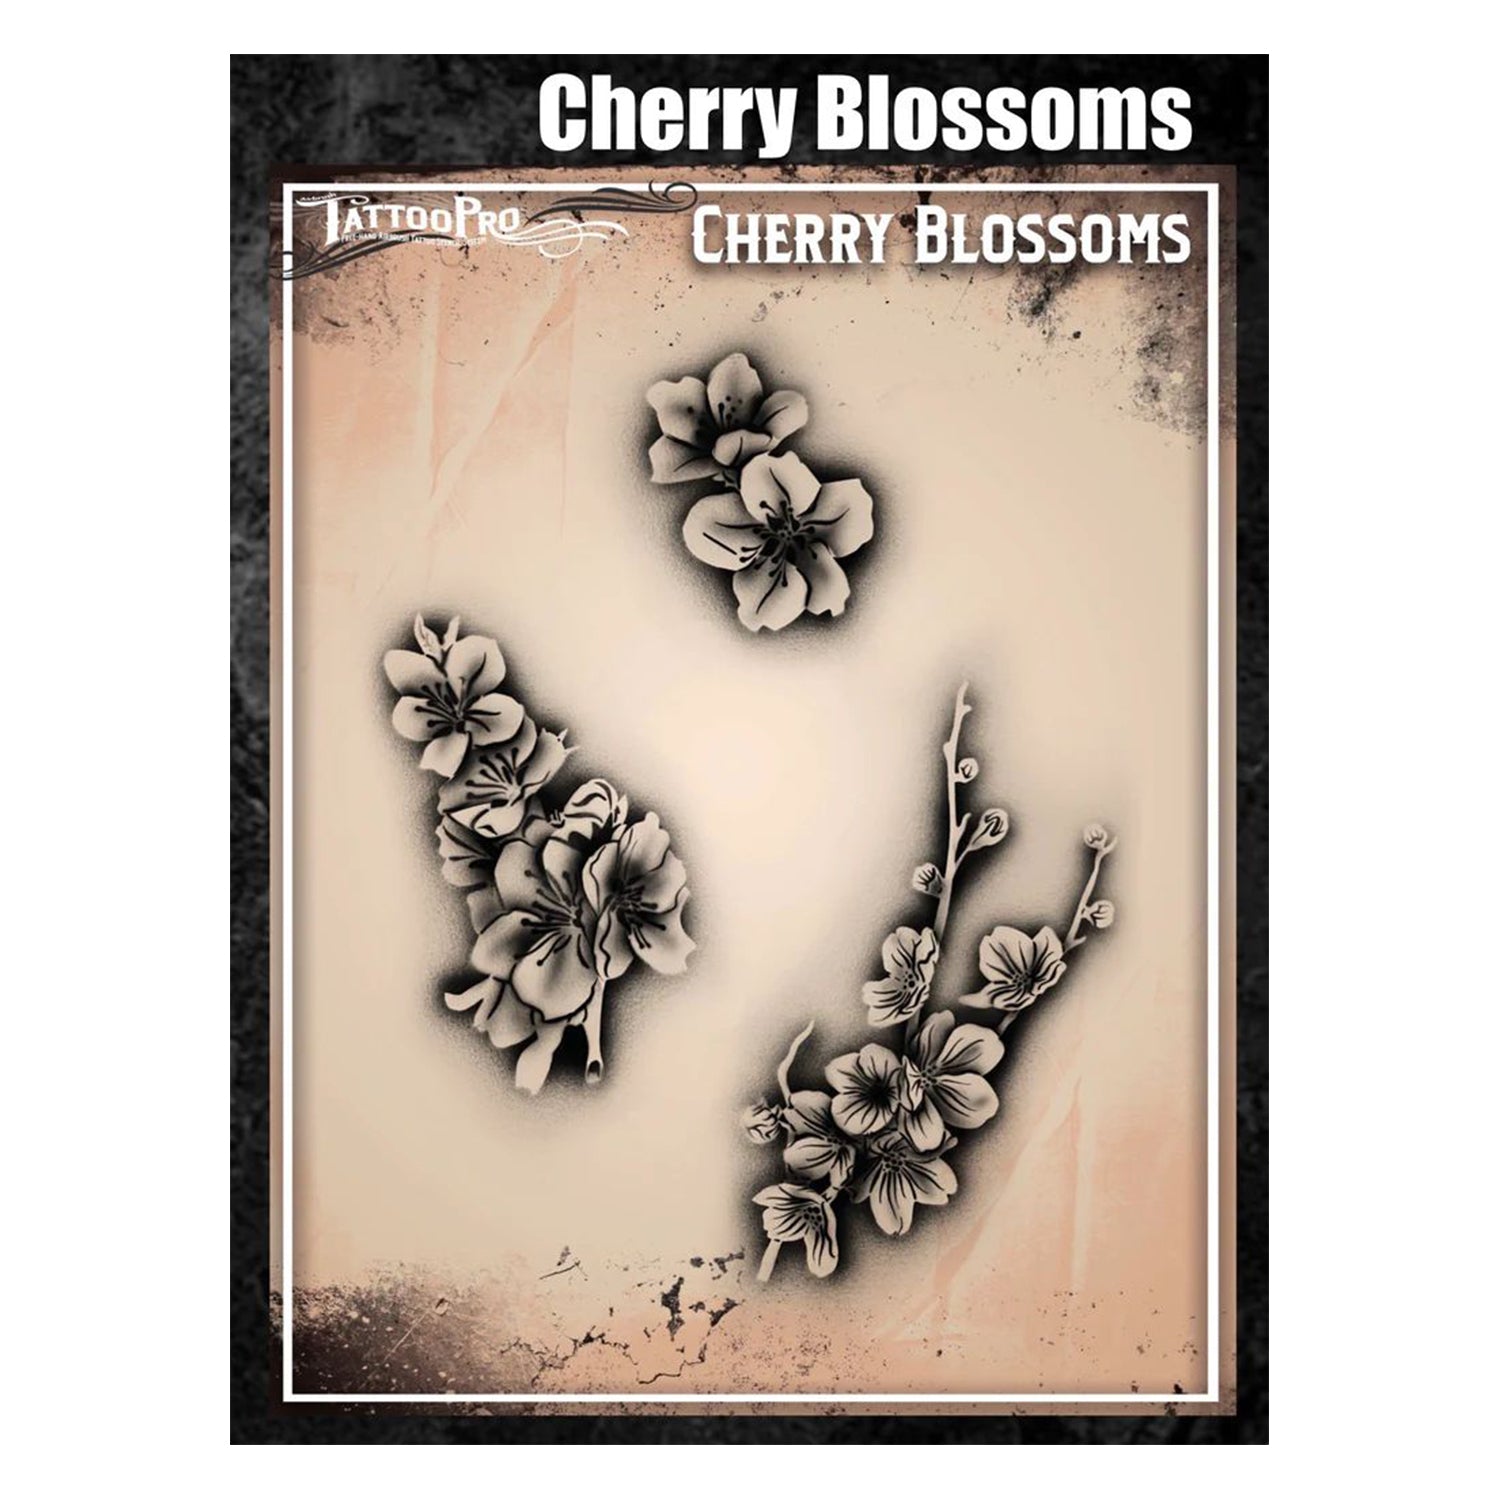 Tattoo Pro Stencils - Cherry Blossoms